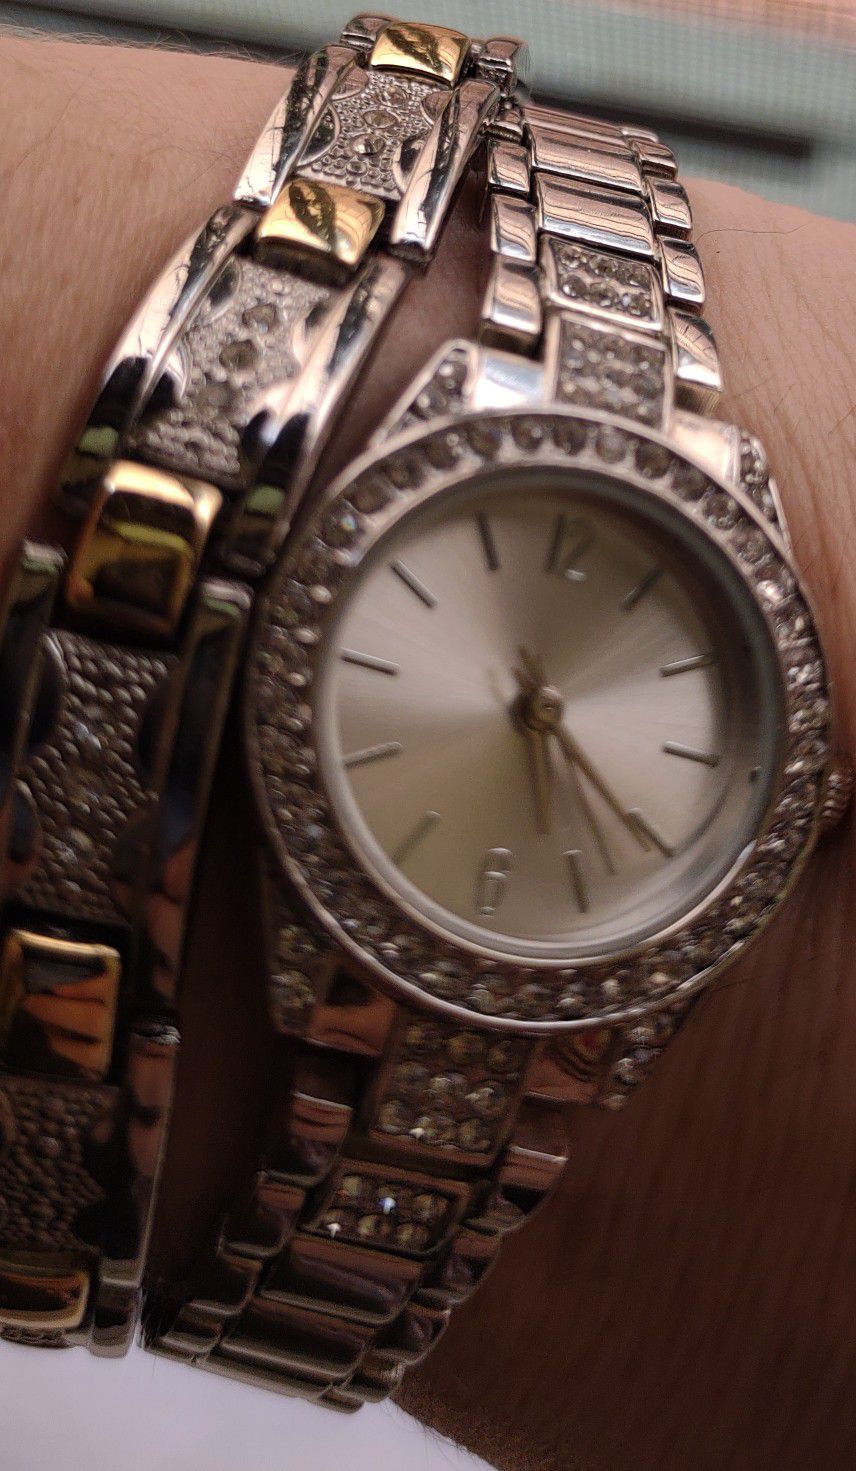 Ladies Watch And Bracelet 